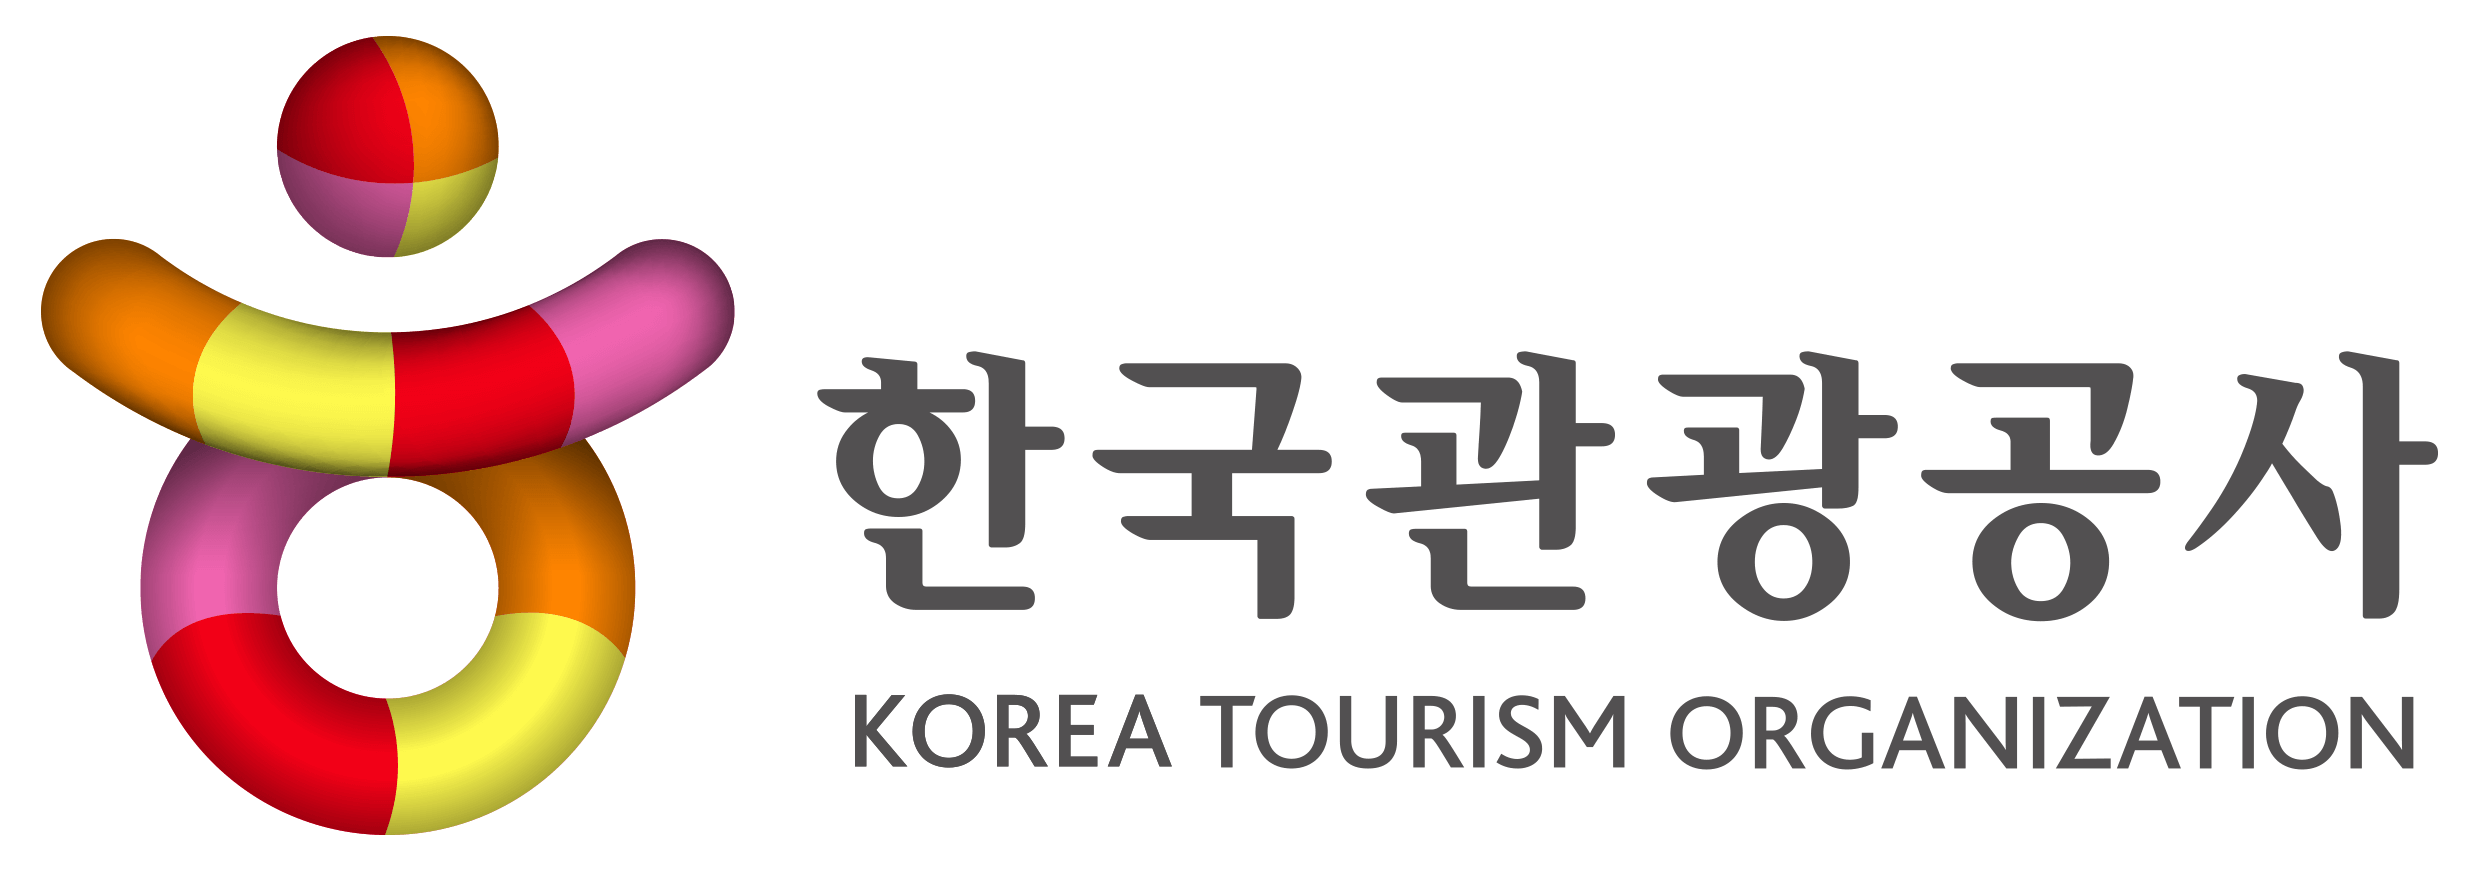 Korea Tourism Organization logo.